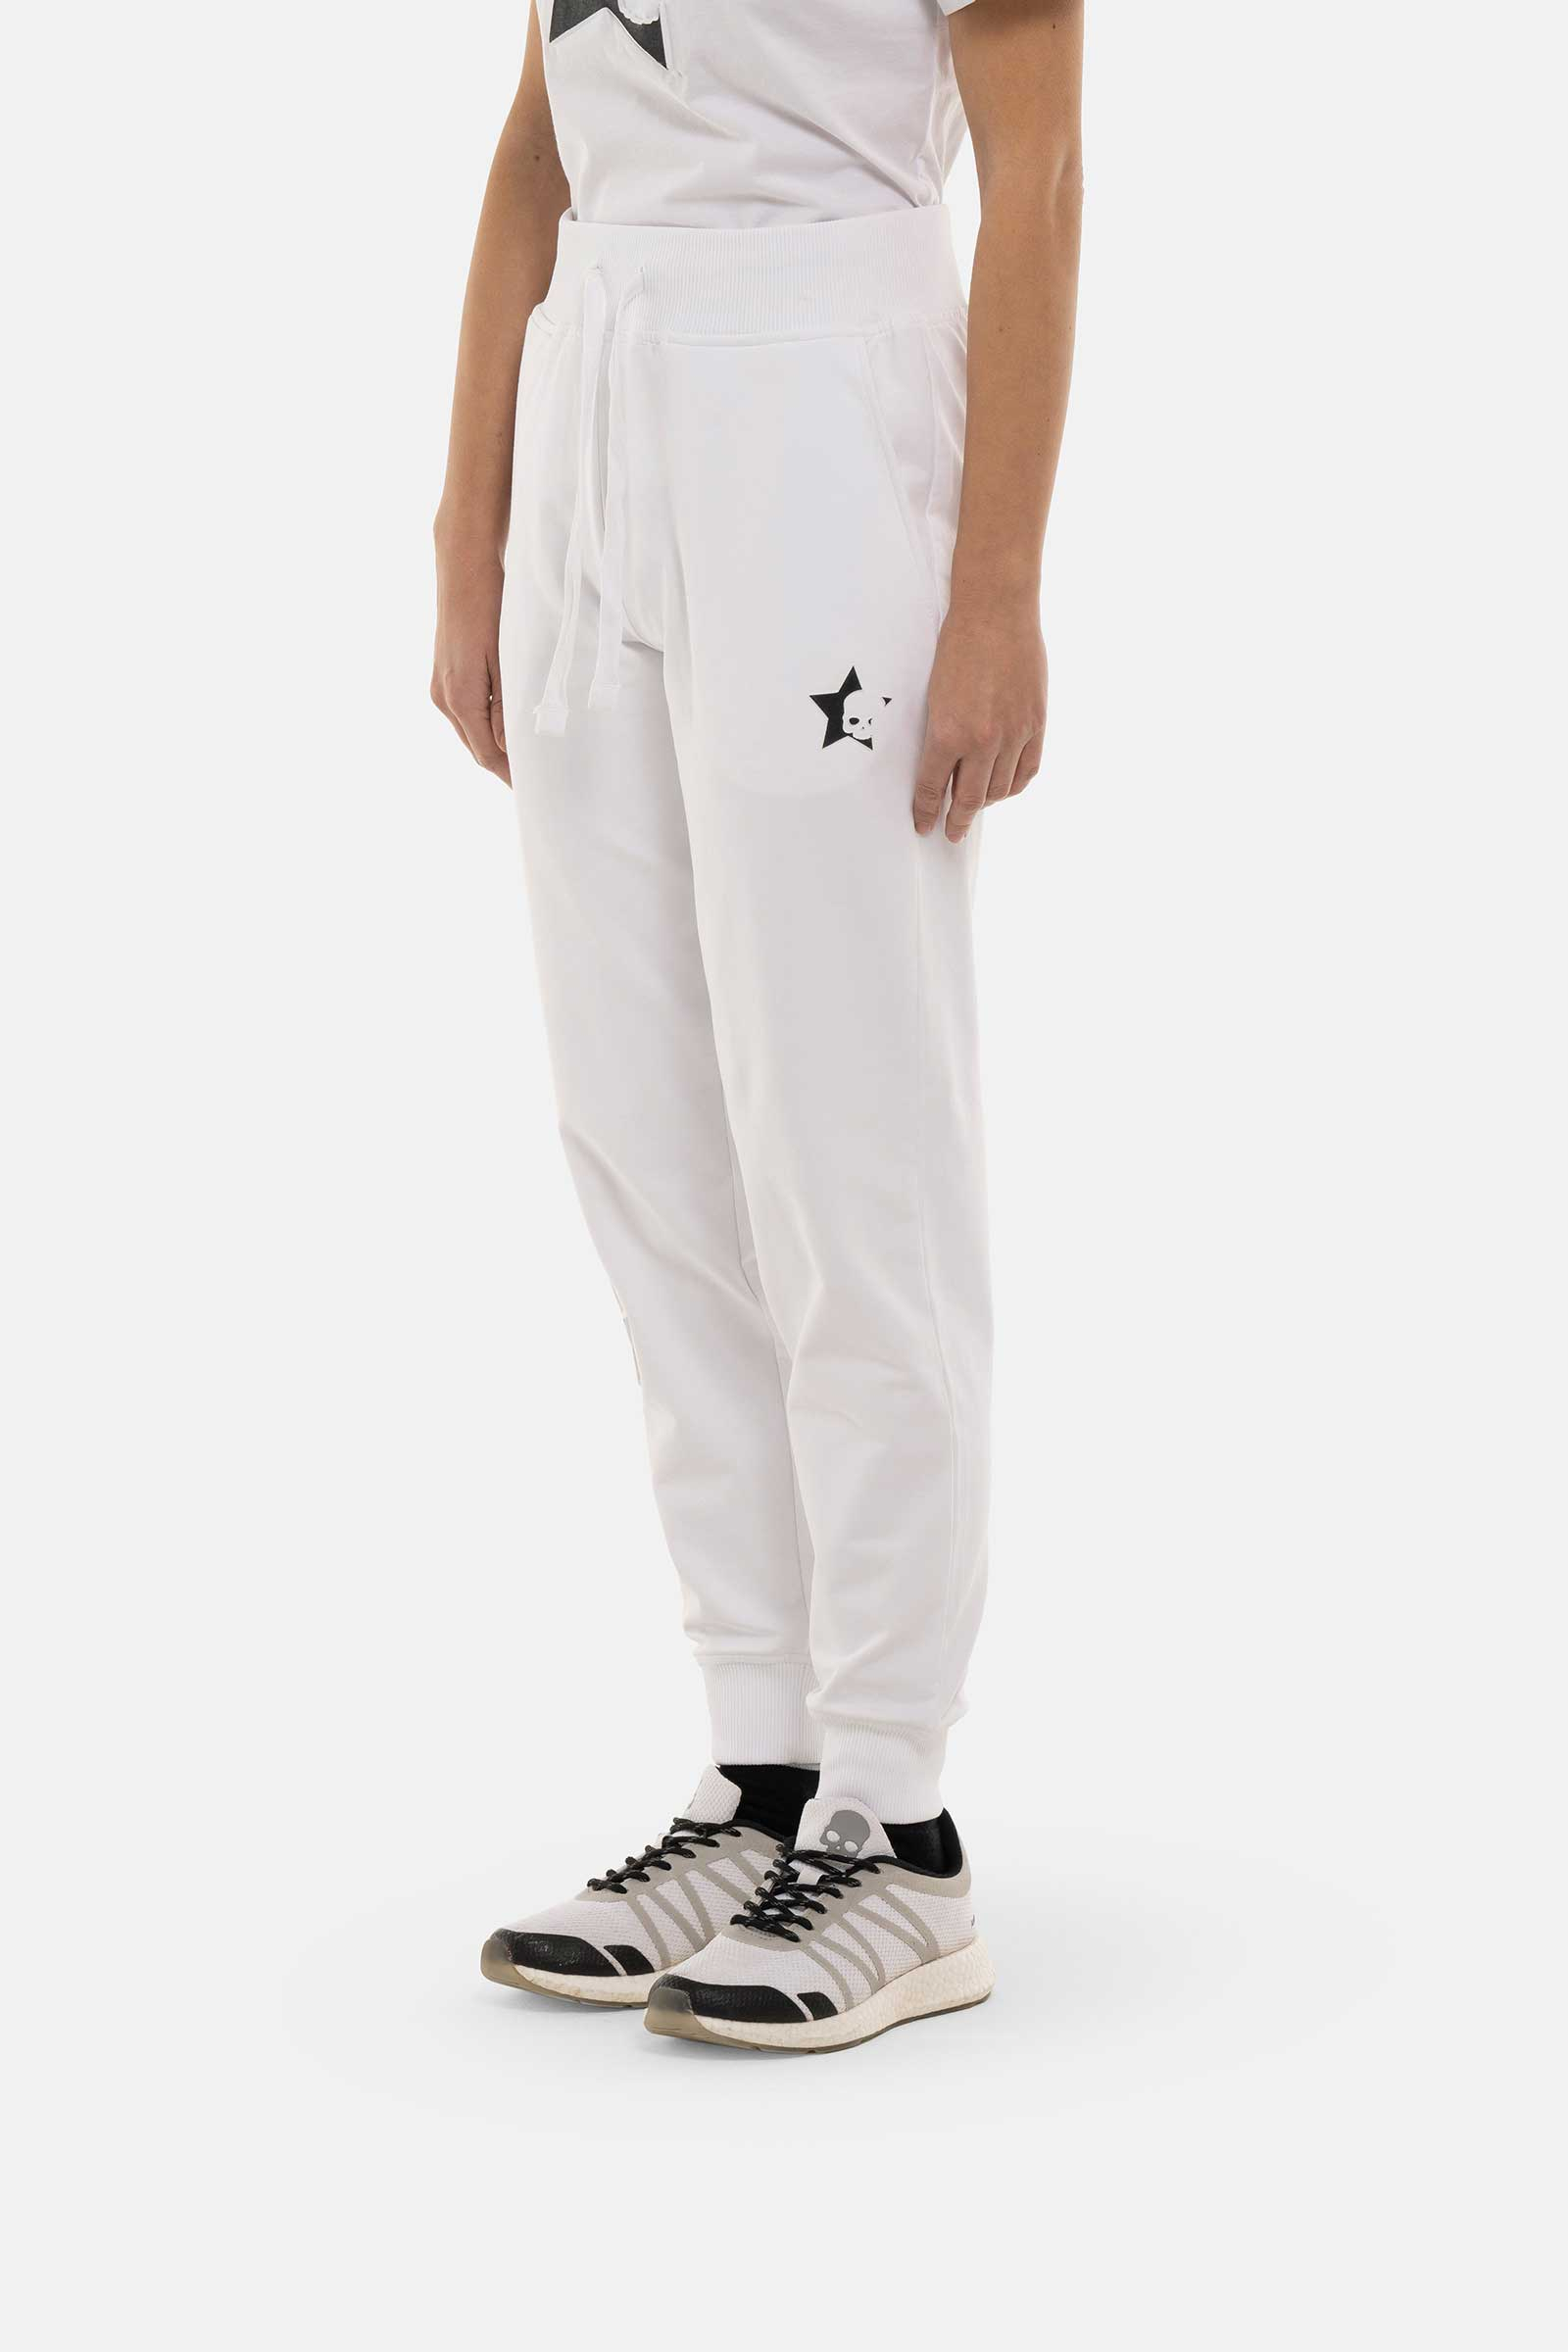 PANTALONI STARS - WHITE - Abbigliamento sportivo | Hydrogen